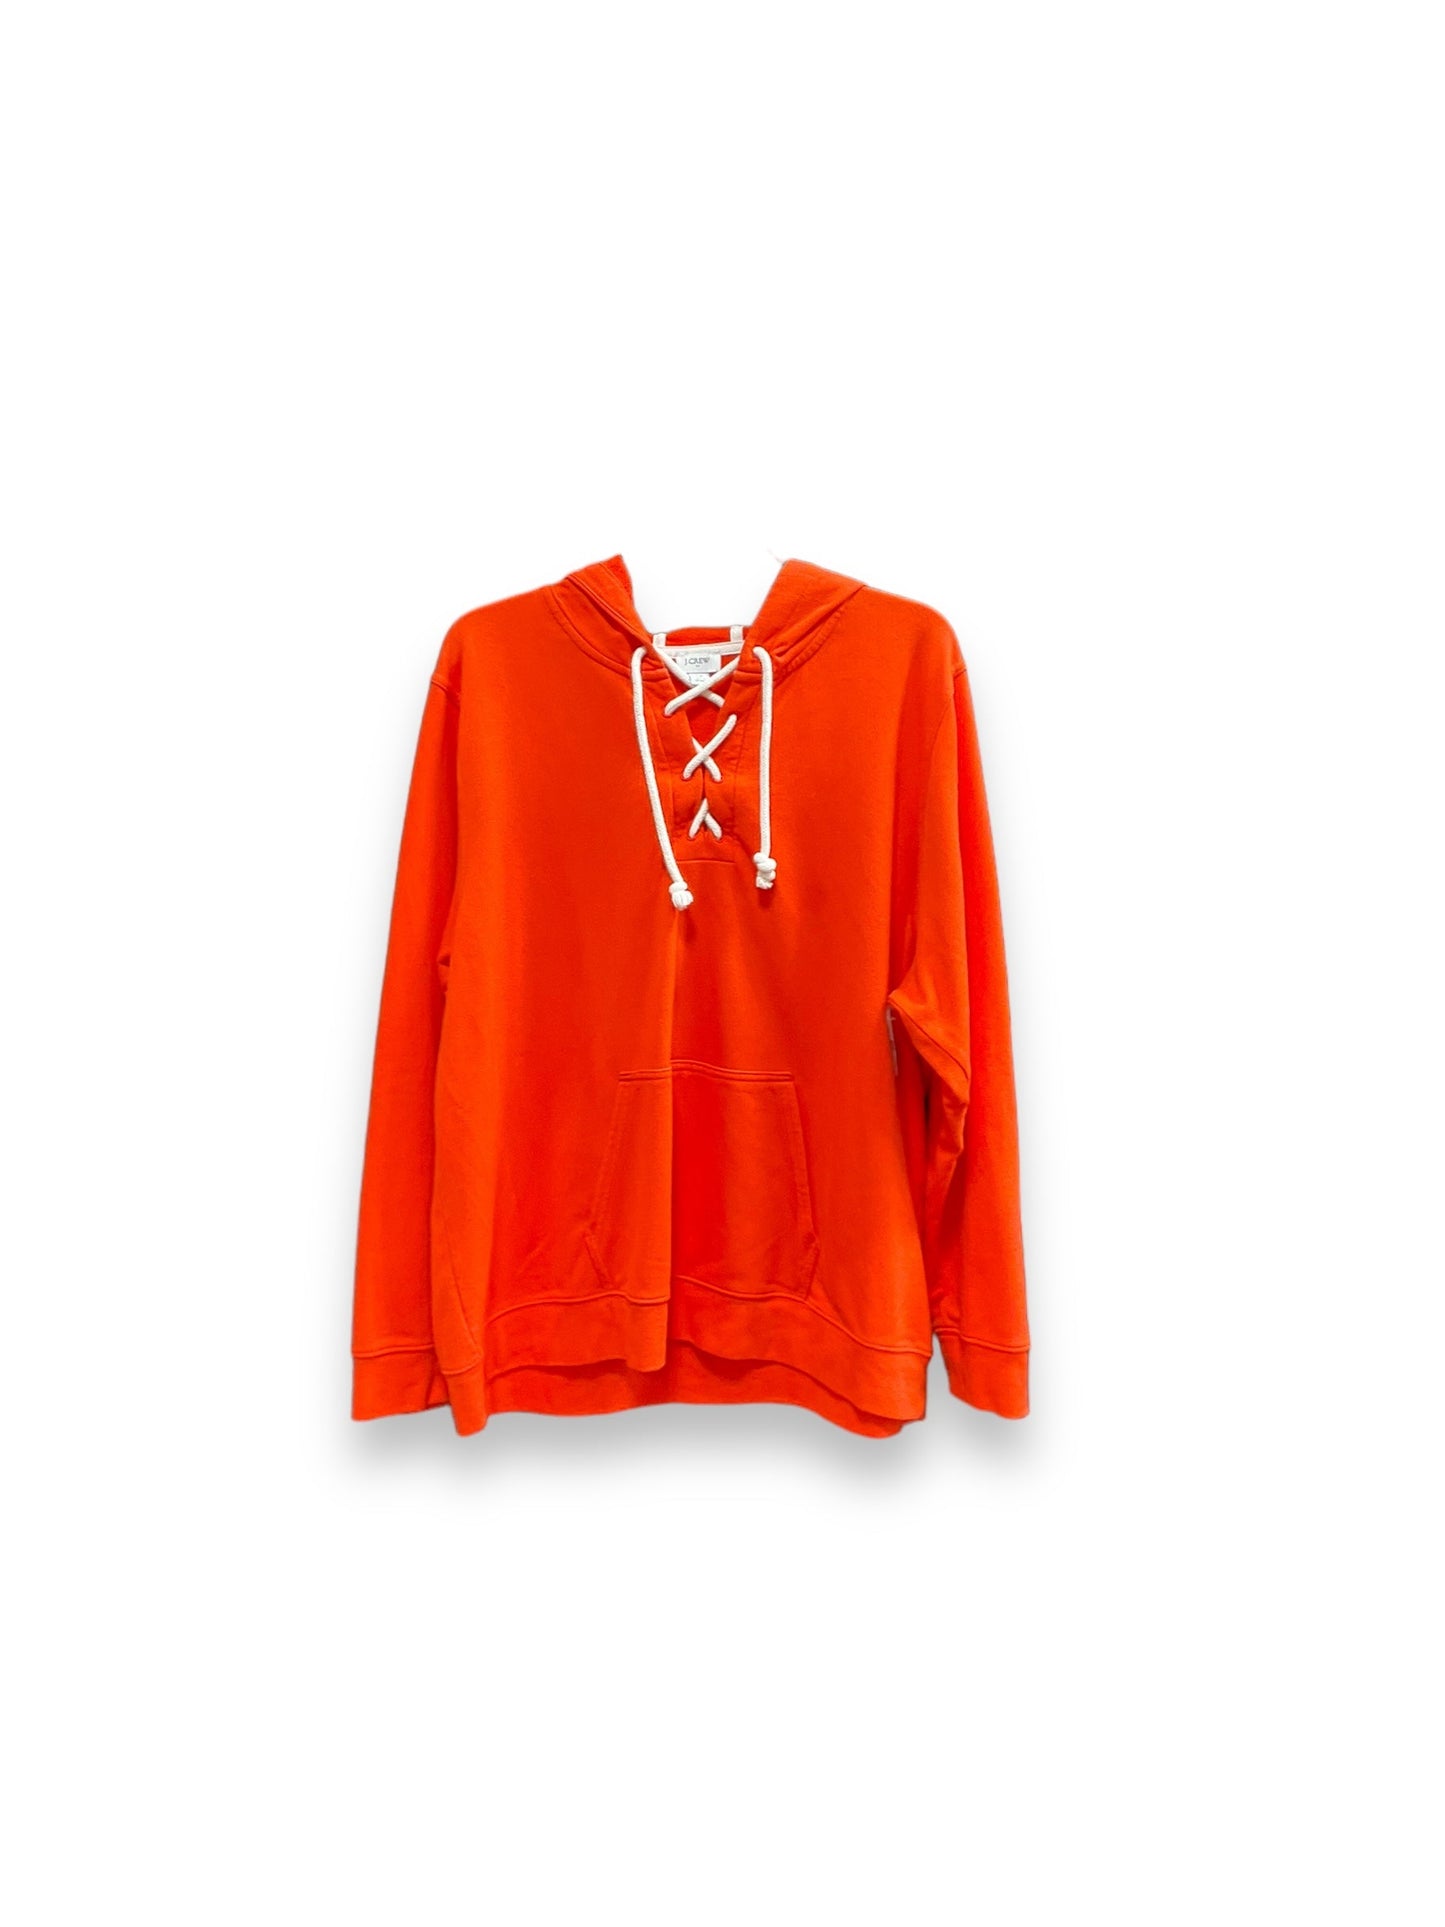 Orange Sweatshirt Hoodie J. Crew, Size 2x